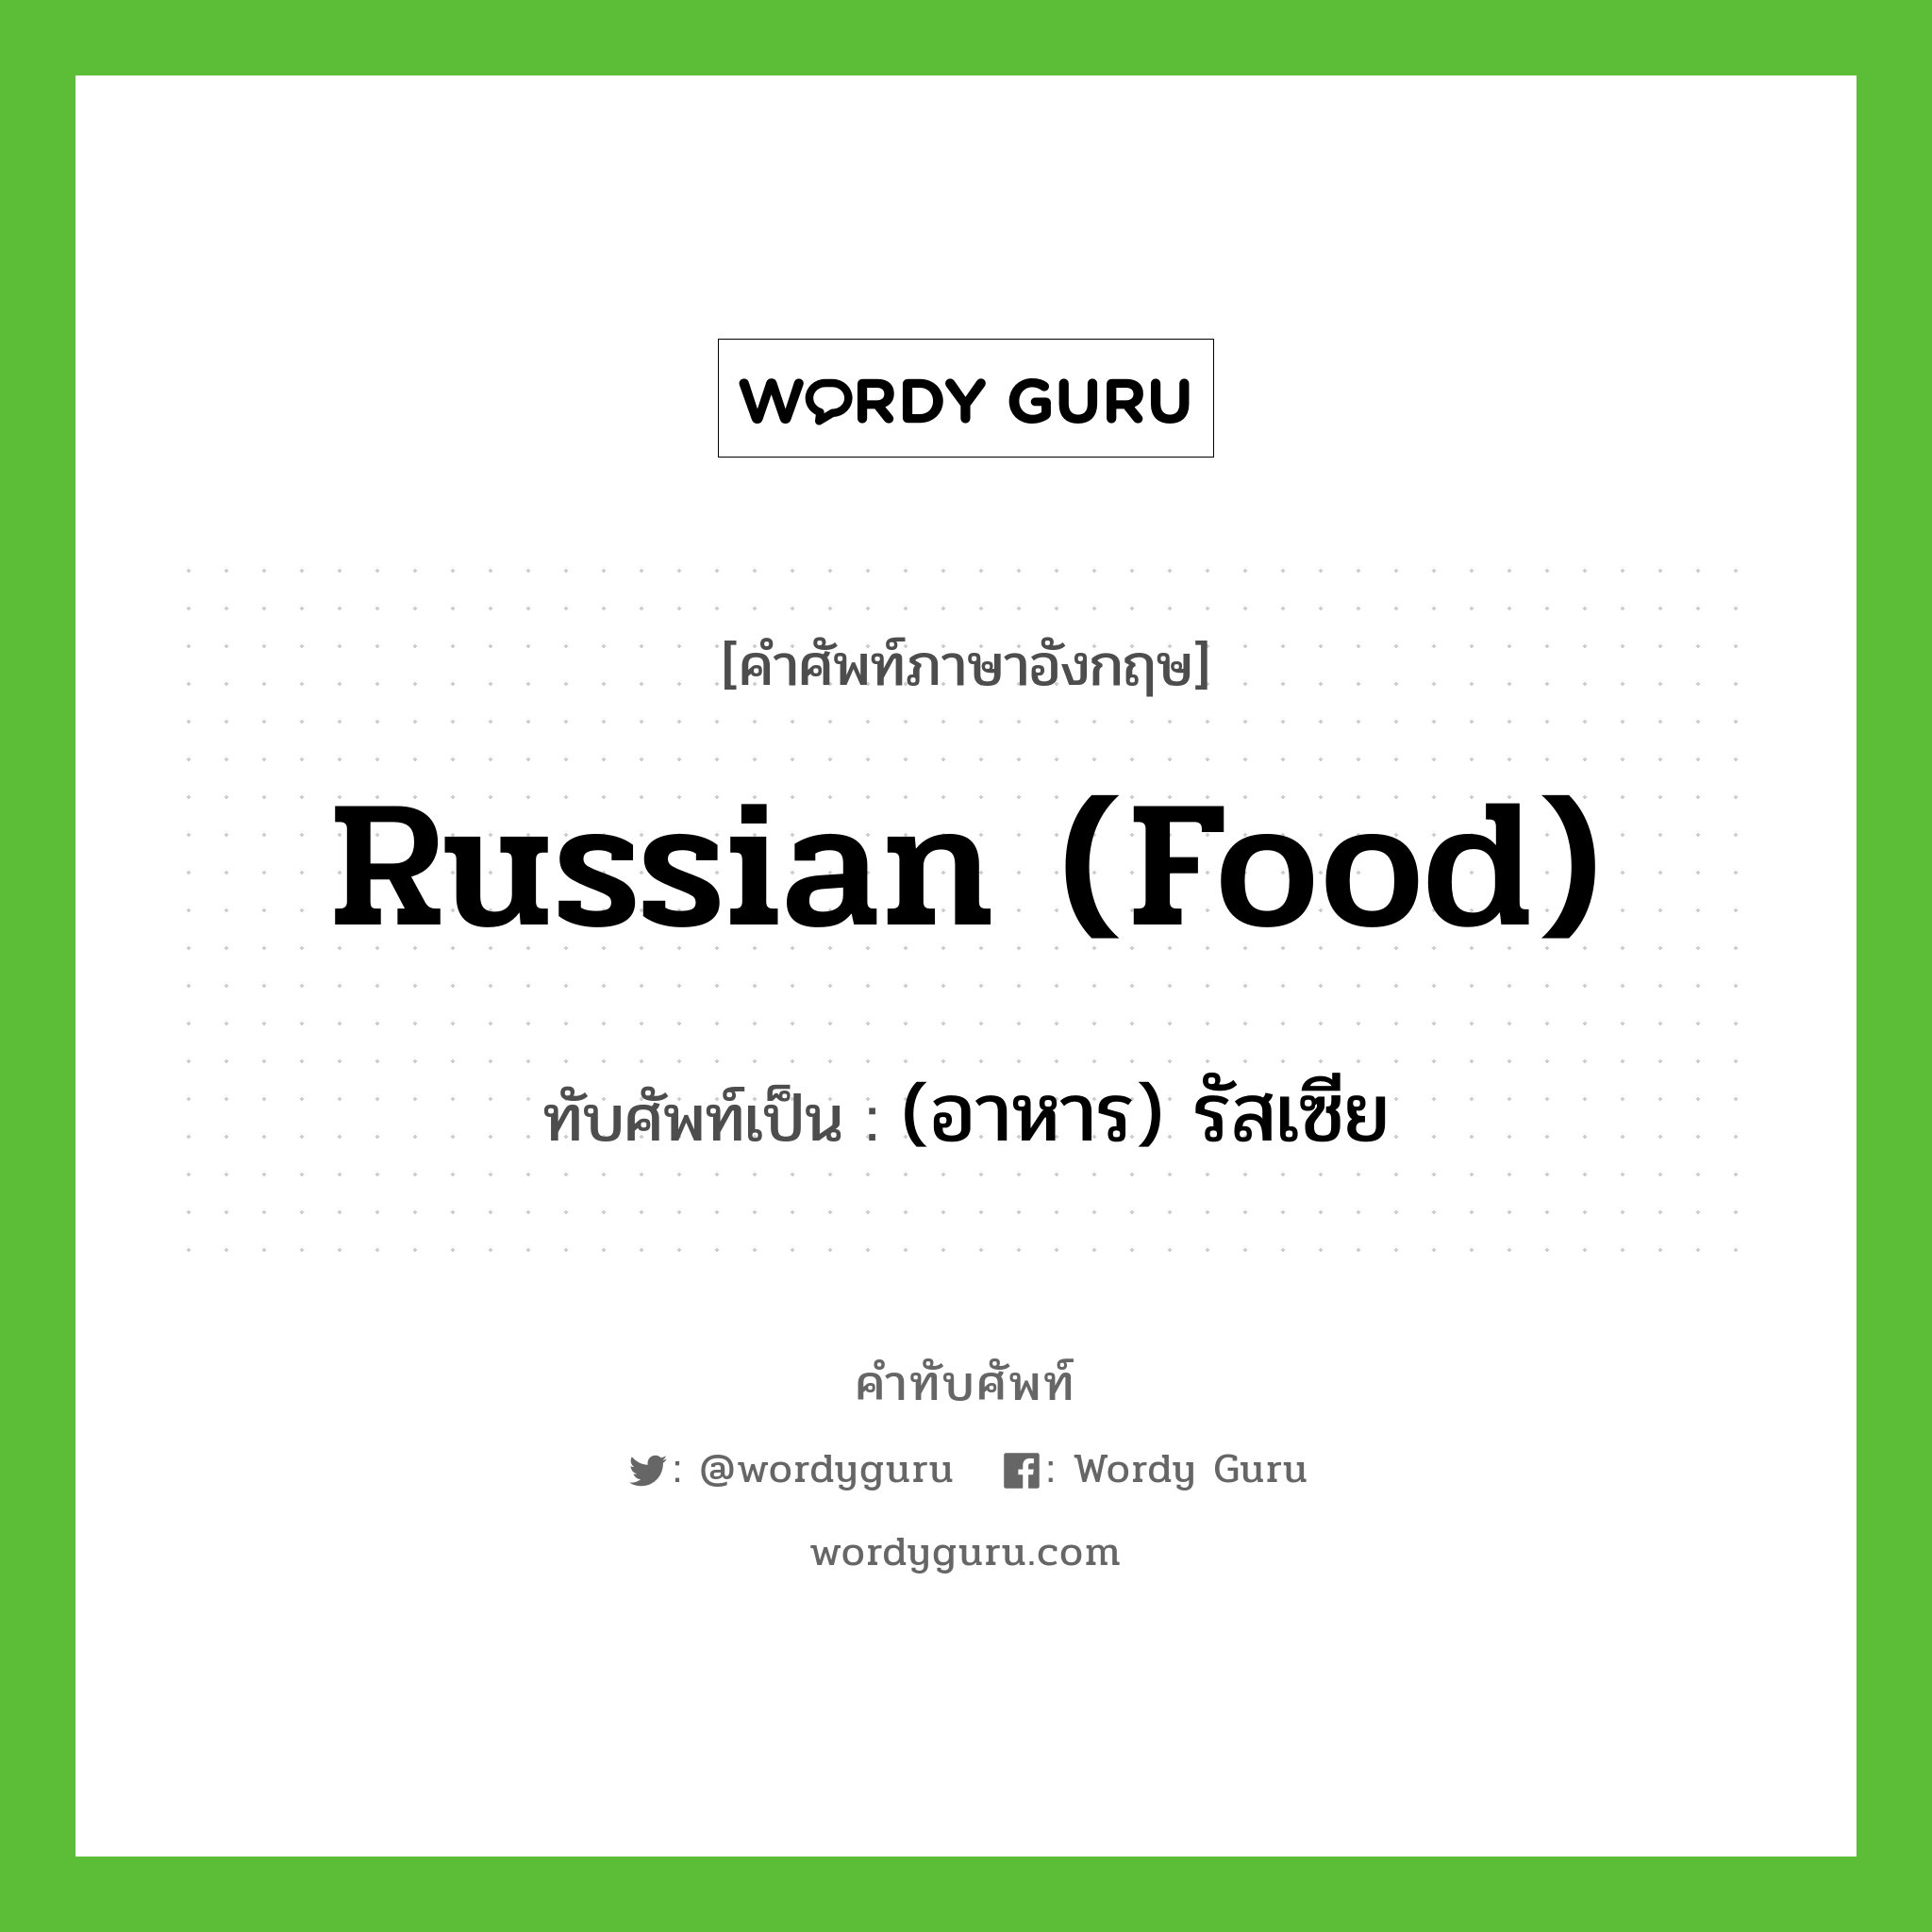 Russian (food) เขียนเป็นคำไทยว่าอะไร?, คำศัพท์ภาษาอังกฤษ Russian (food) ทับศัพท์เป็น (อาหาร) รัสเซีย